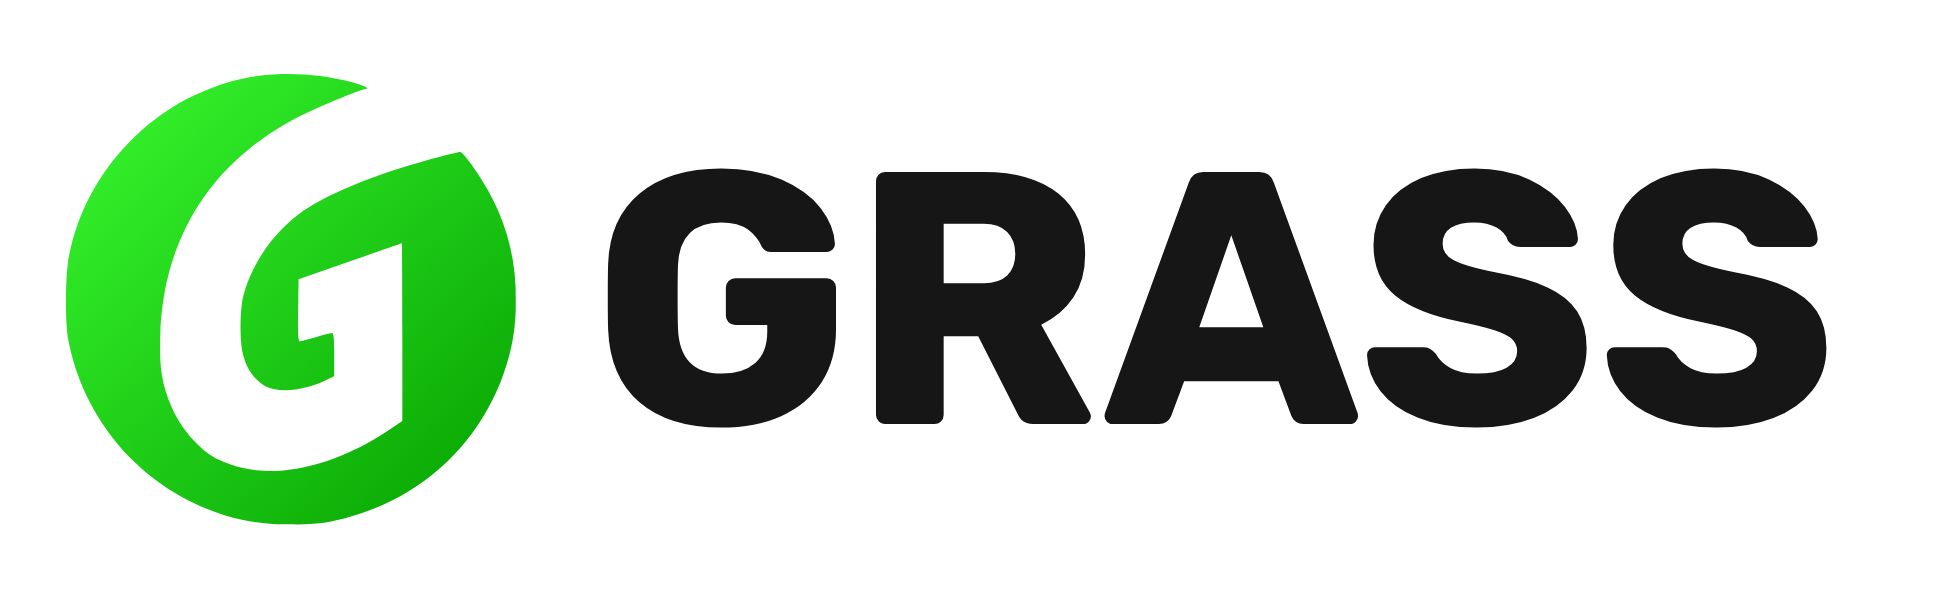 Граас. Grass компания. Логотип фирмы Грасс. Grass реклама. Grass автохимия логотип.